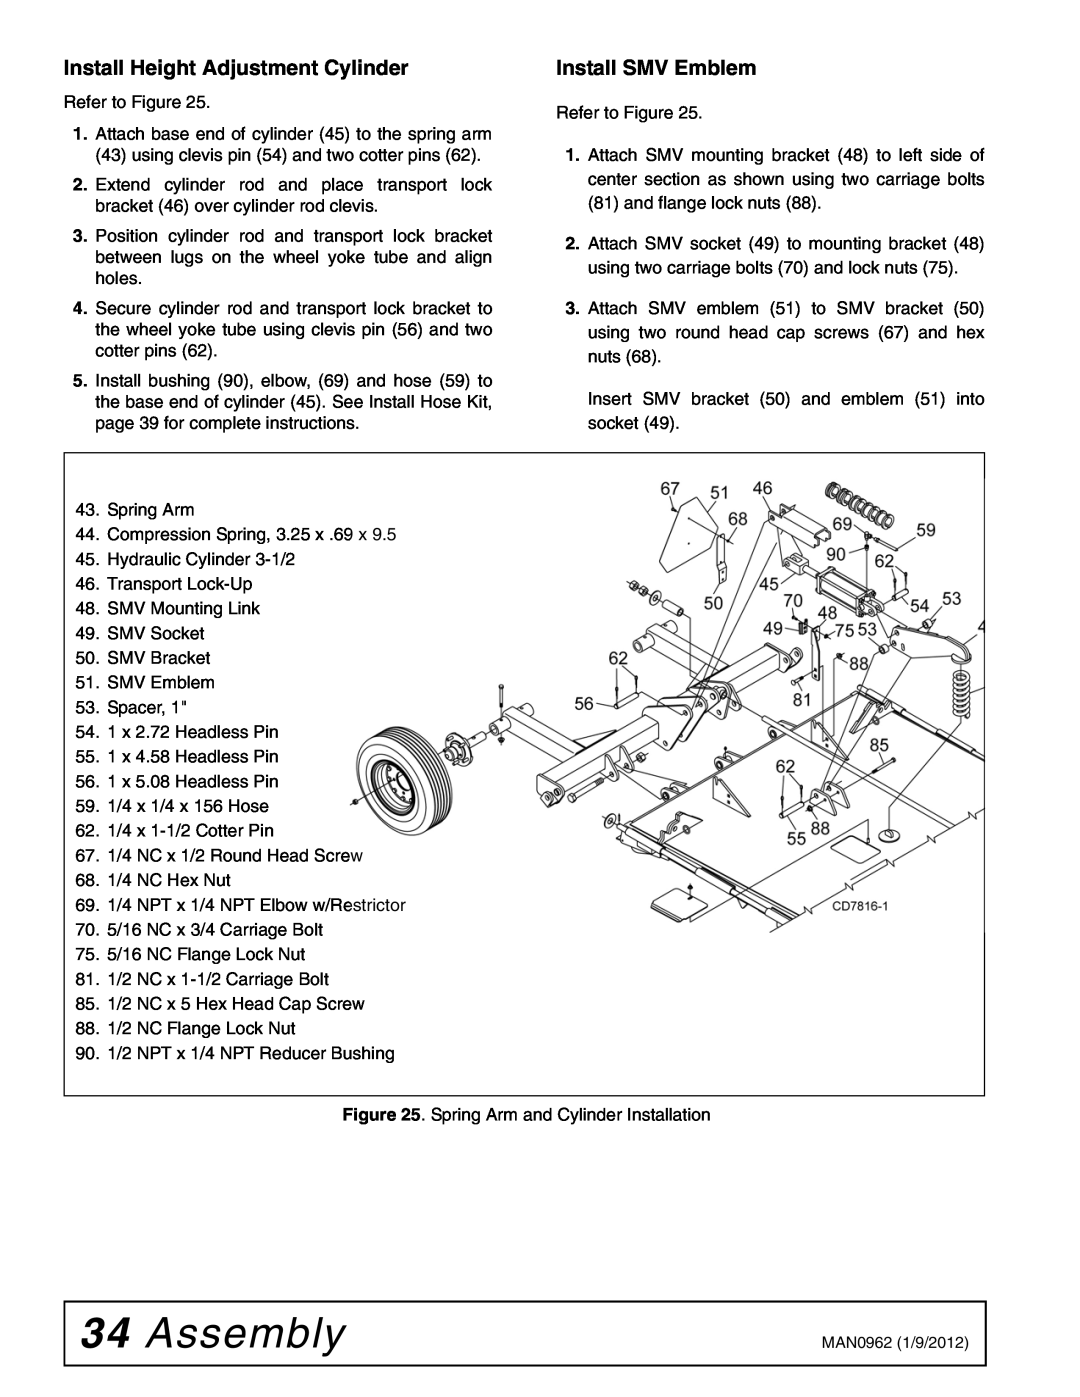 Woods Equipment BW180XQ, BW126XQ manual Assembly, Install Height Adjustment Cylinder, Install SMV Emblem 